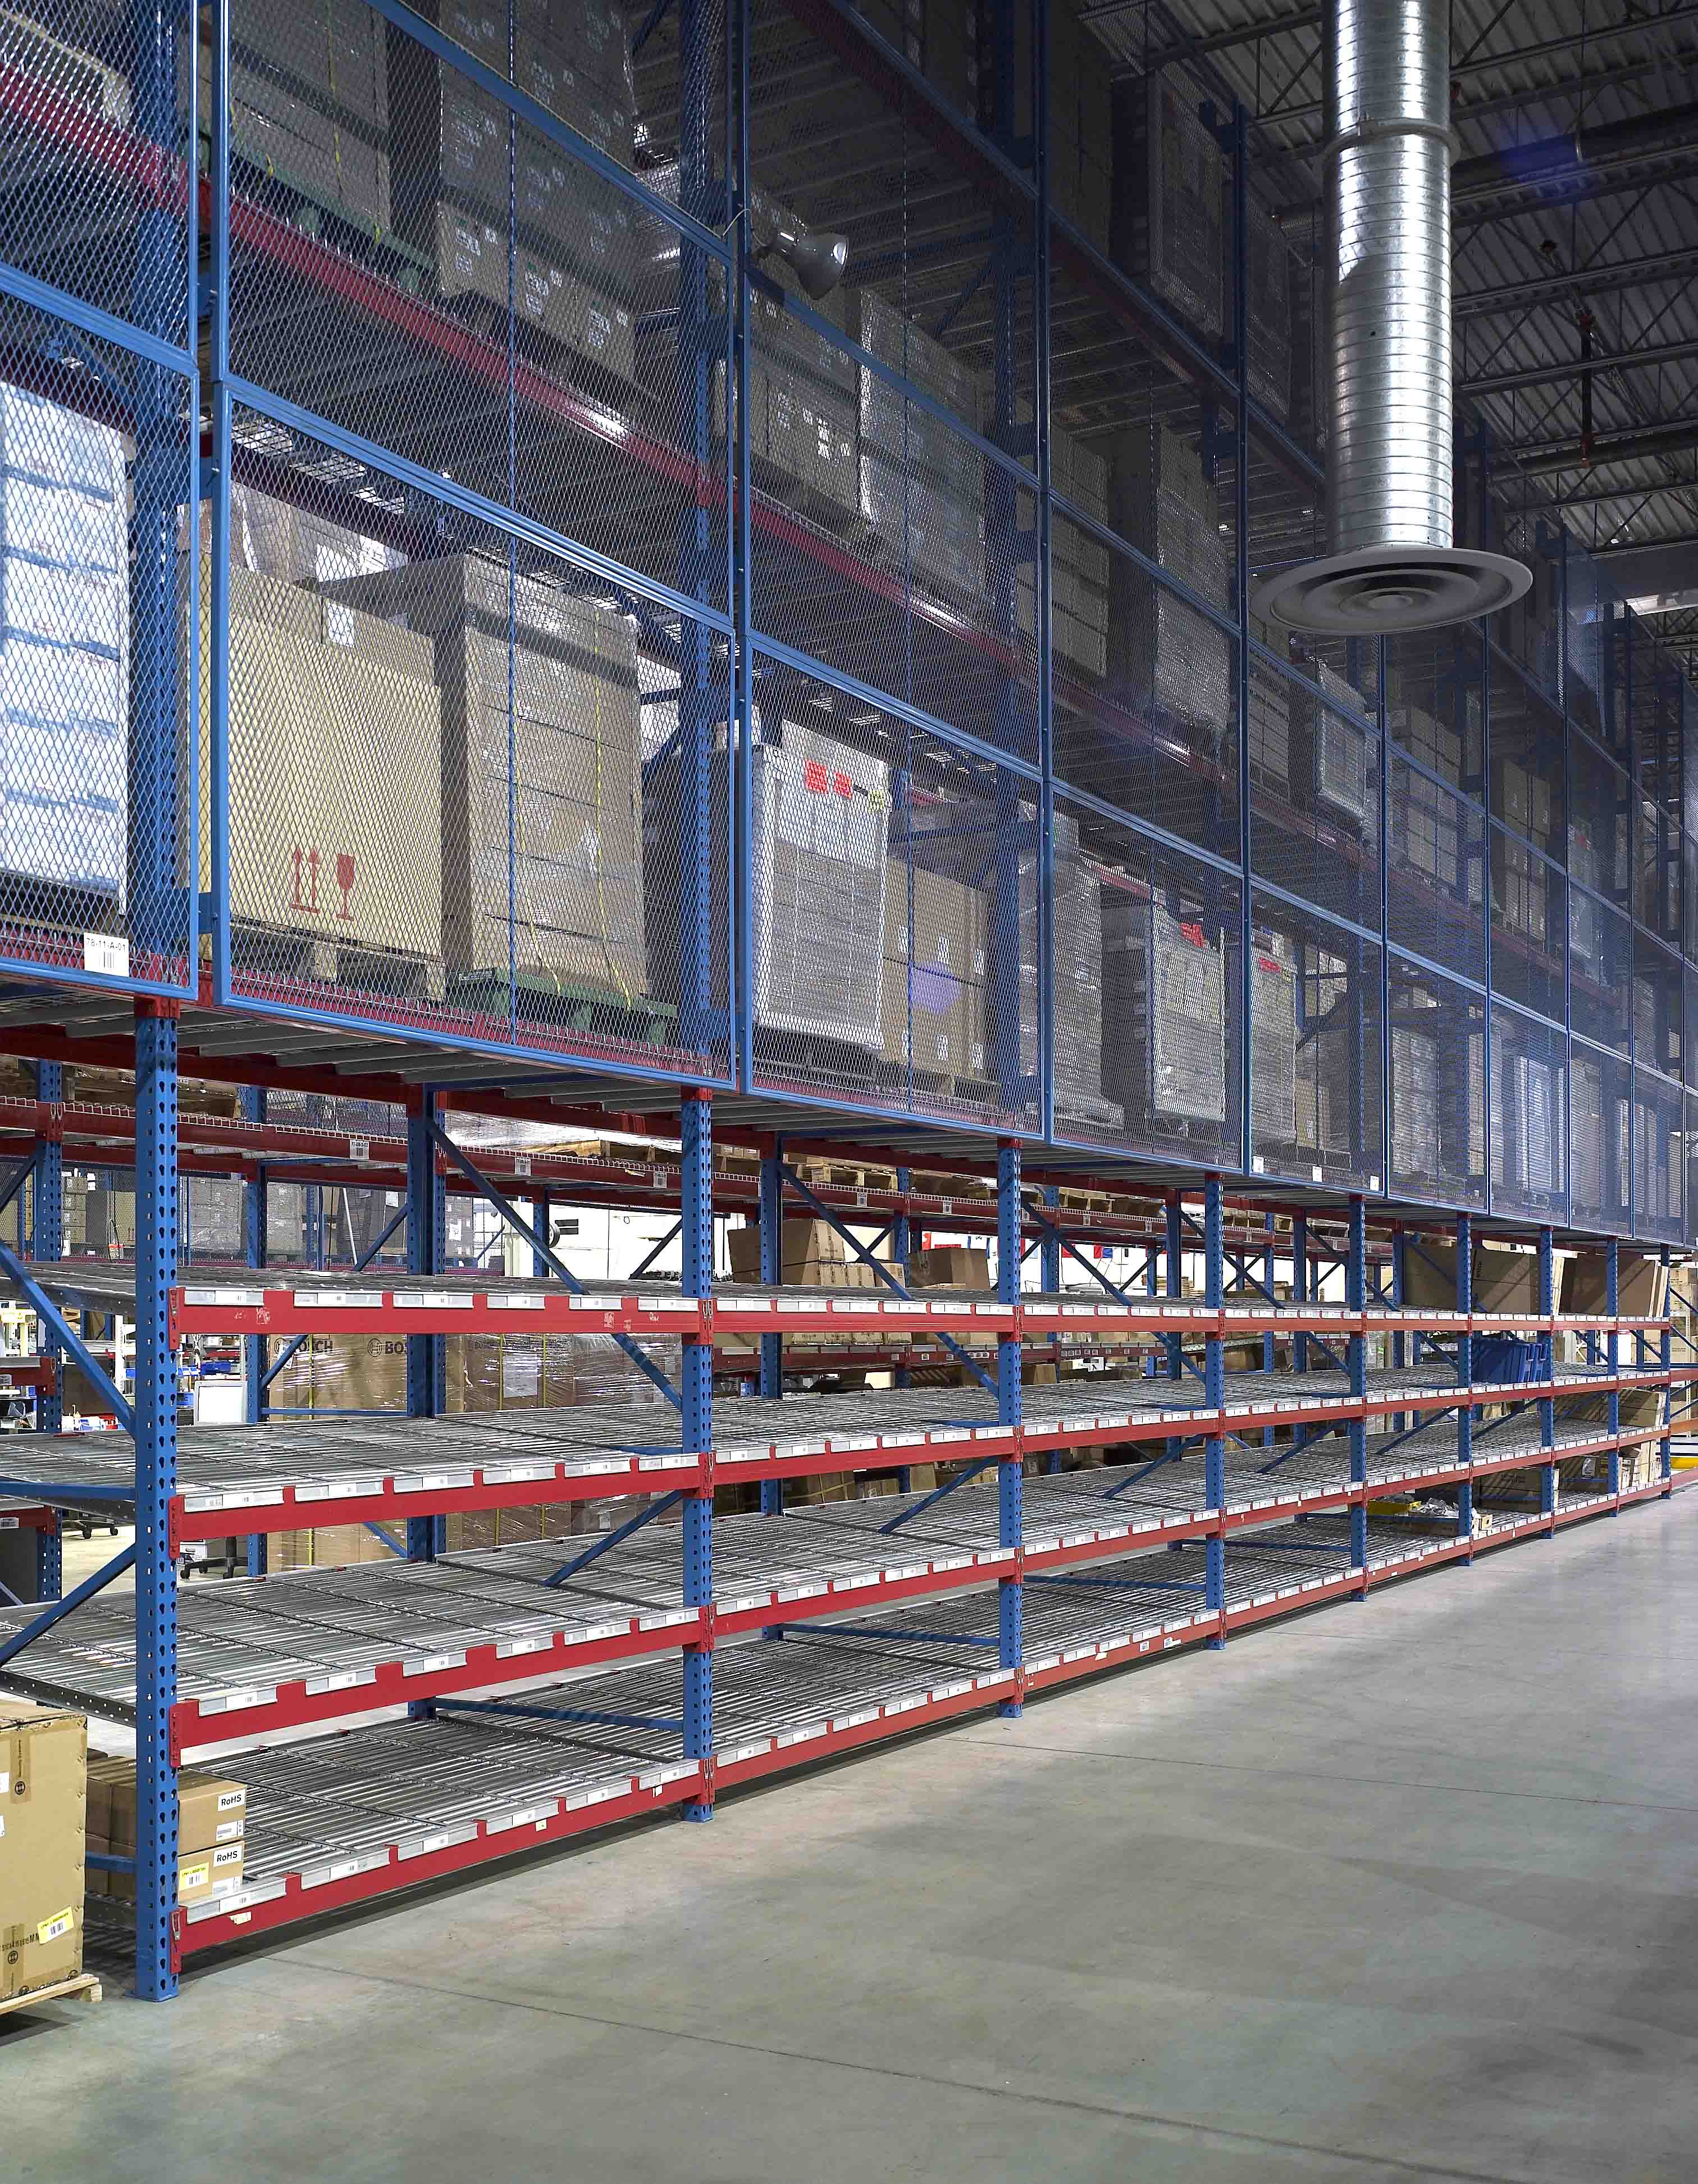 warehouse design with storage shelving units